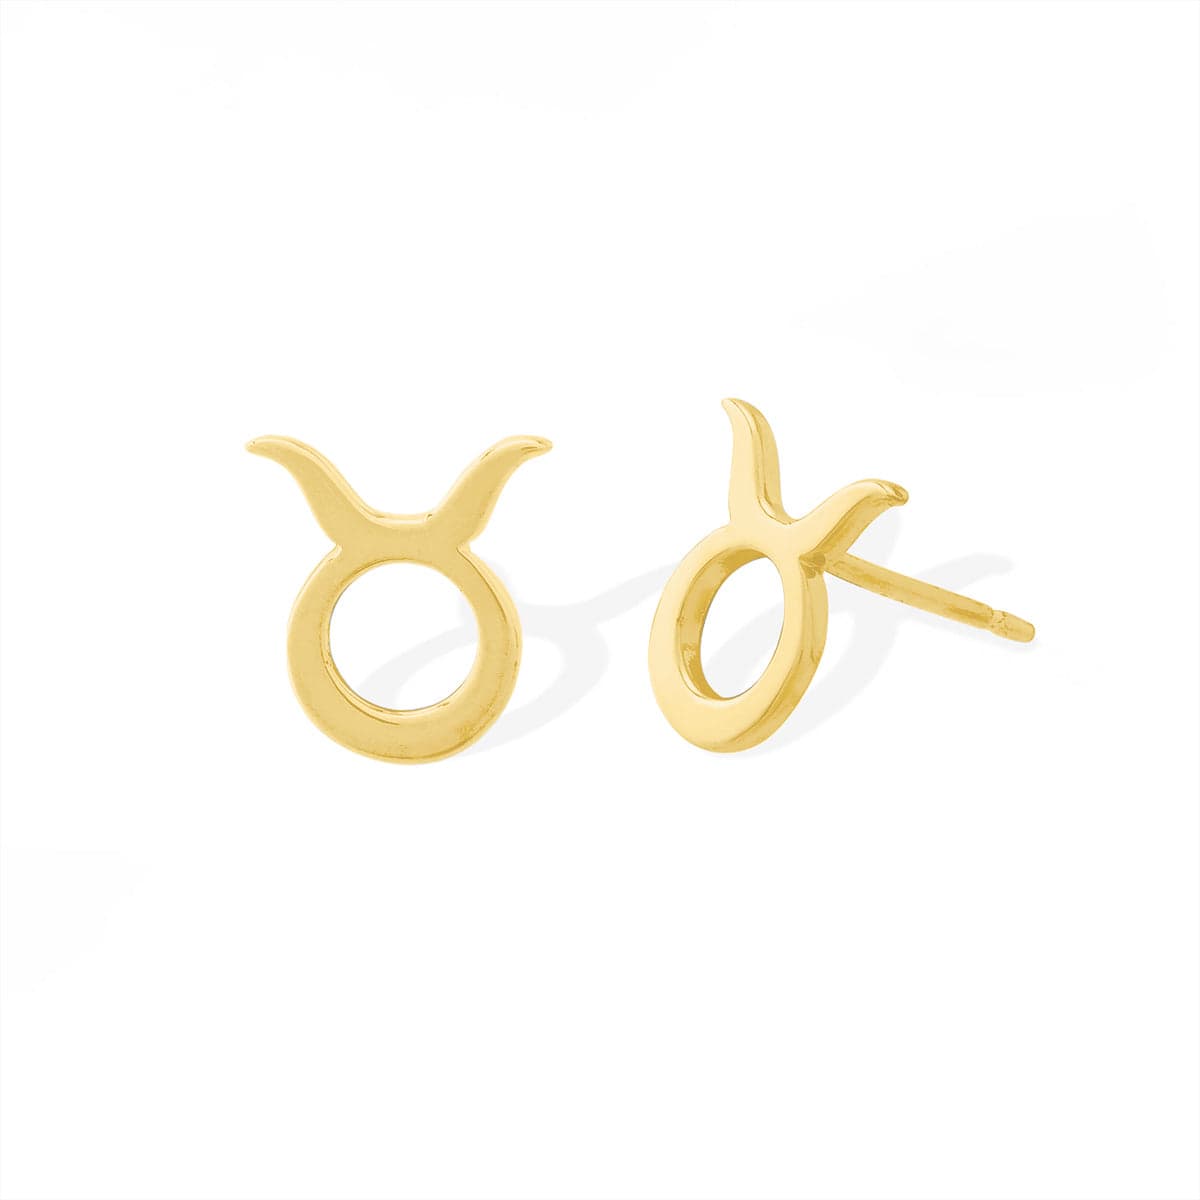 Boma Jewelry Earrings 14K Gold Plated / Taurus Zodiac Studs